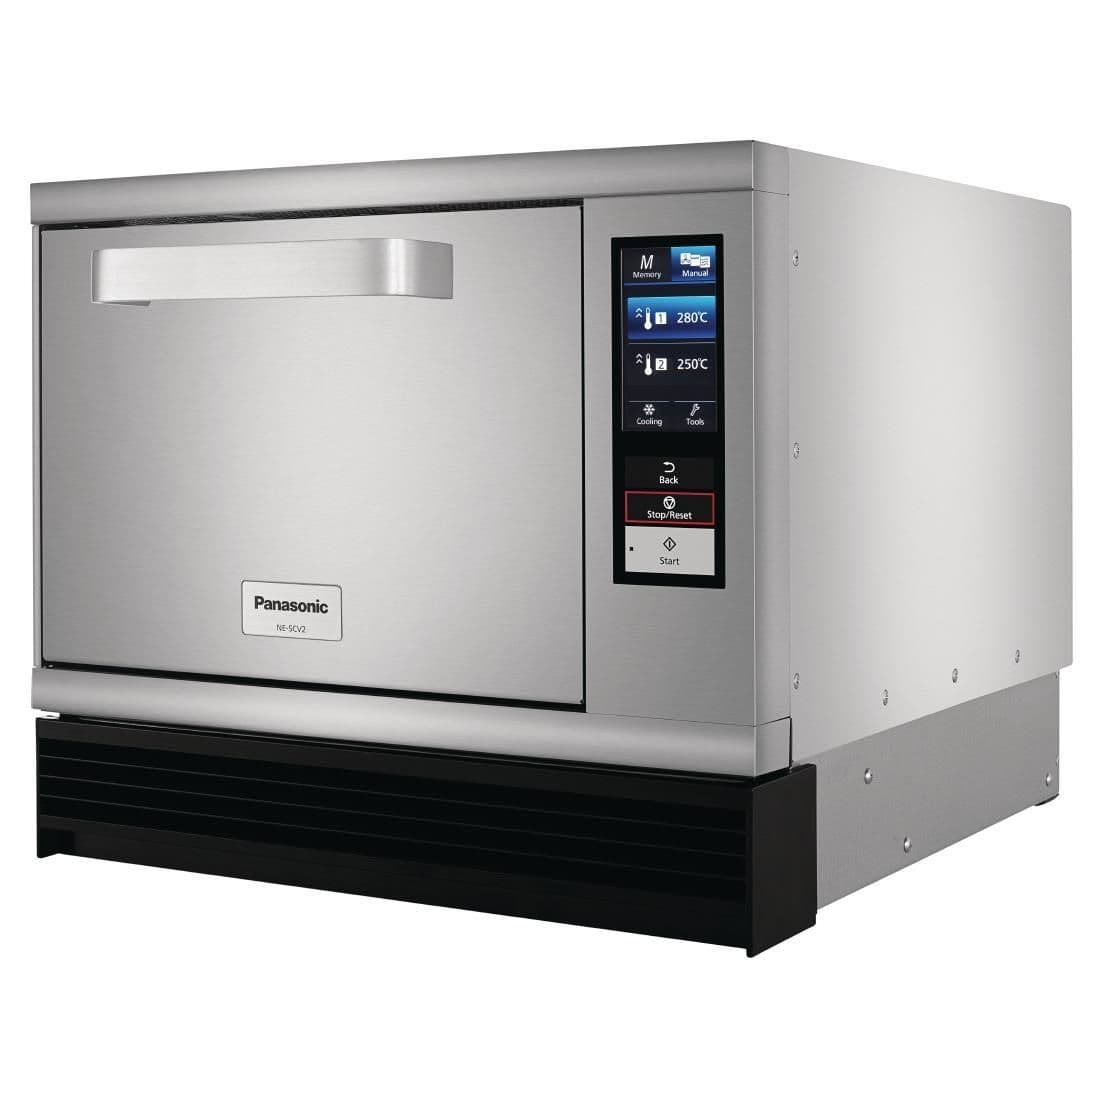 CS882 Panasonic High Speed Oven NE-SCV2 JD Catering Equipment Solutions Ltd